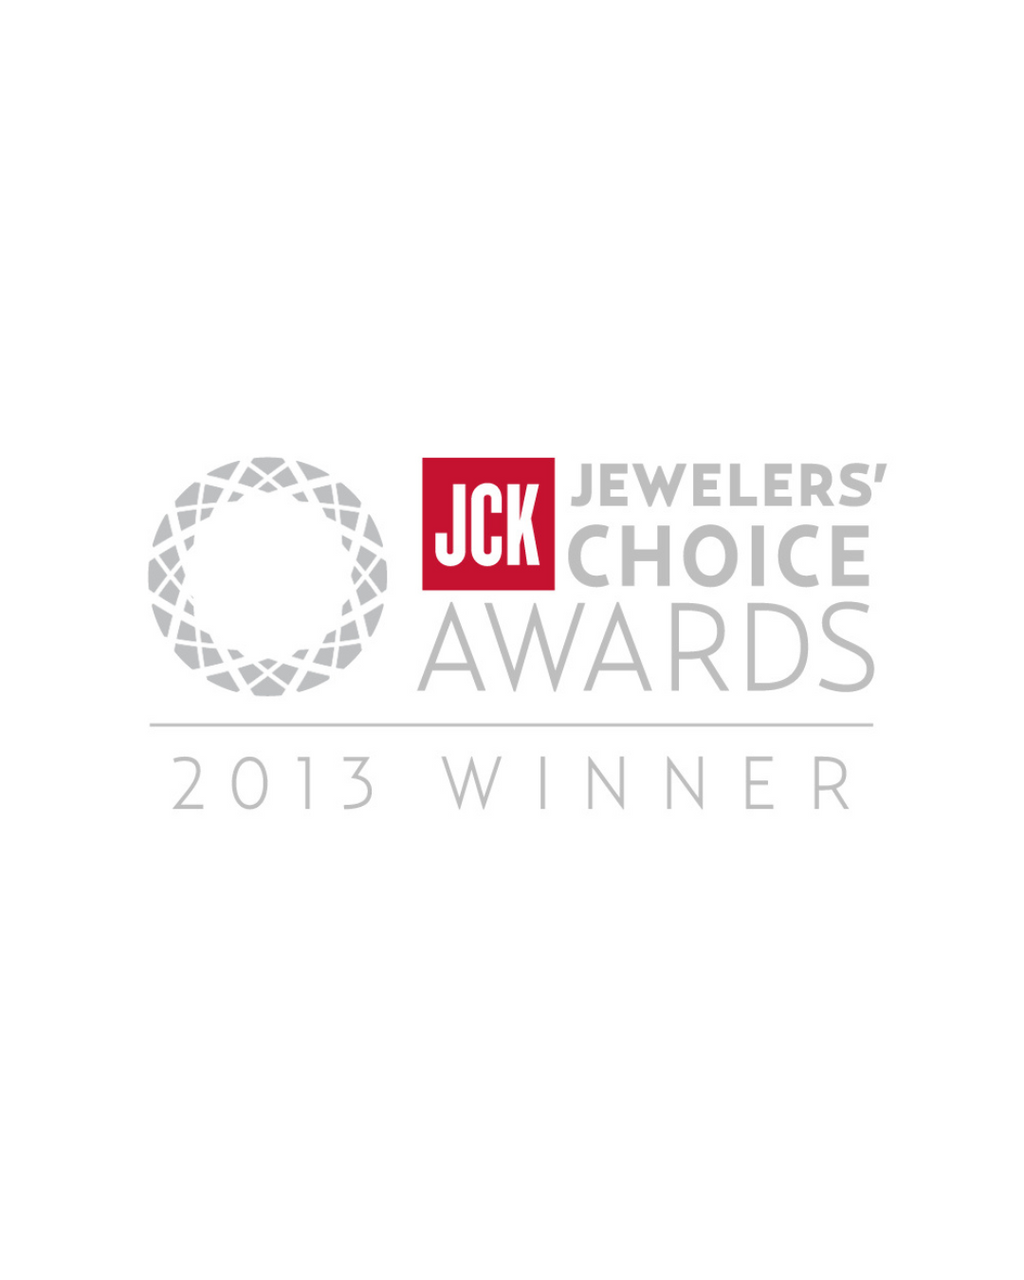 JCK Jewelers Choice Awards 2013 winner | Geralyn Sheridan Designs 